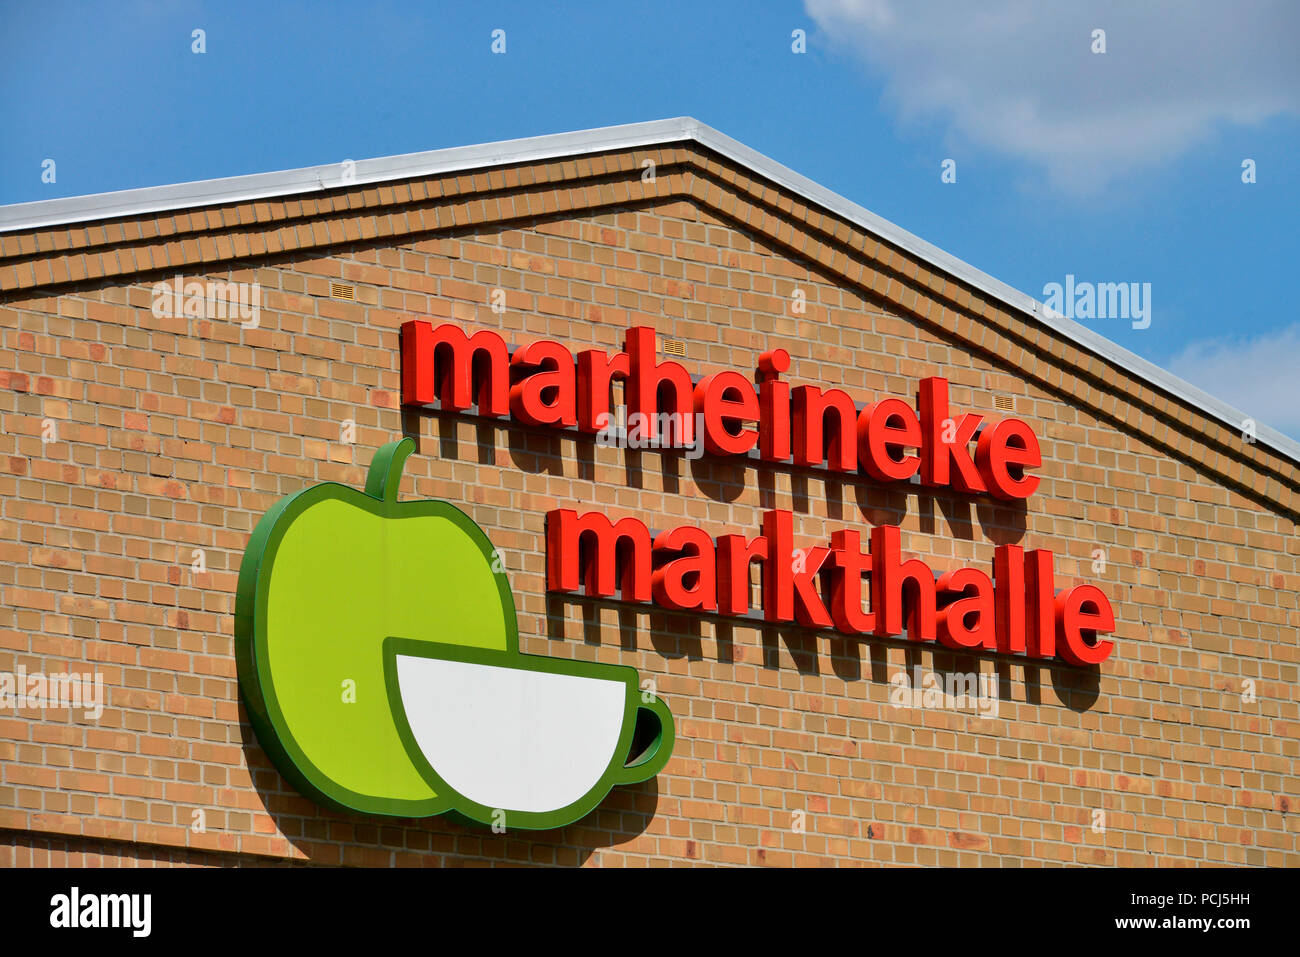 Marheineke Markthalle, Zossener Strasse, Kreuzberg di Berlino, Deutschland Foto Stock